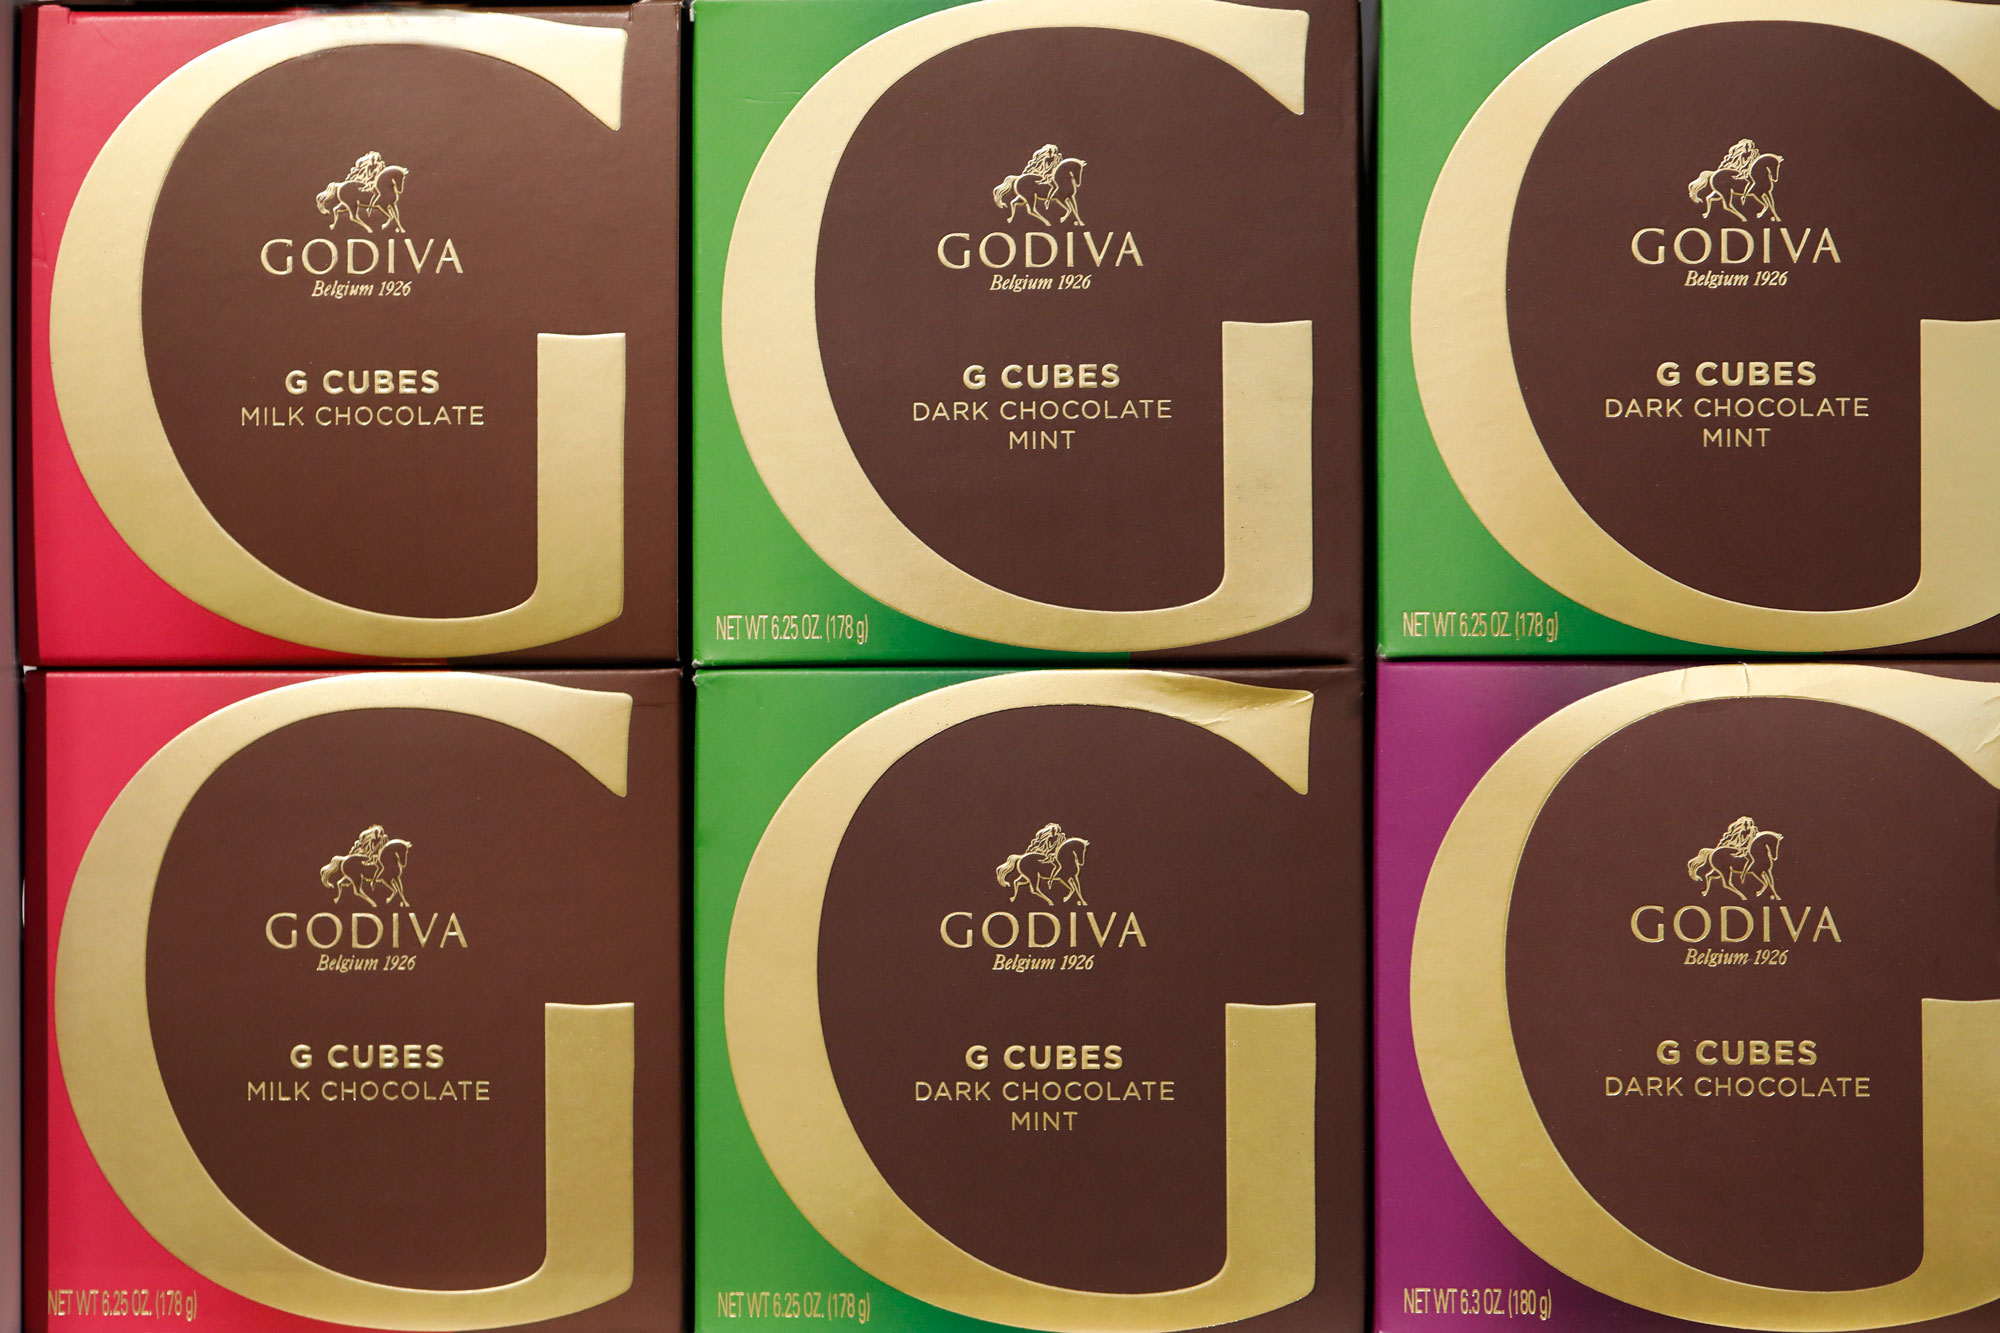 SEA New Stand Godiva G Cubes Chocolates